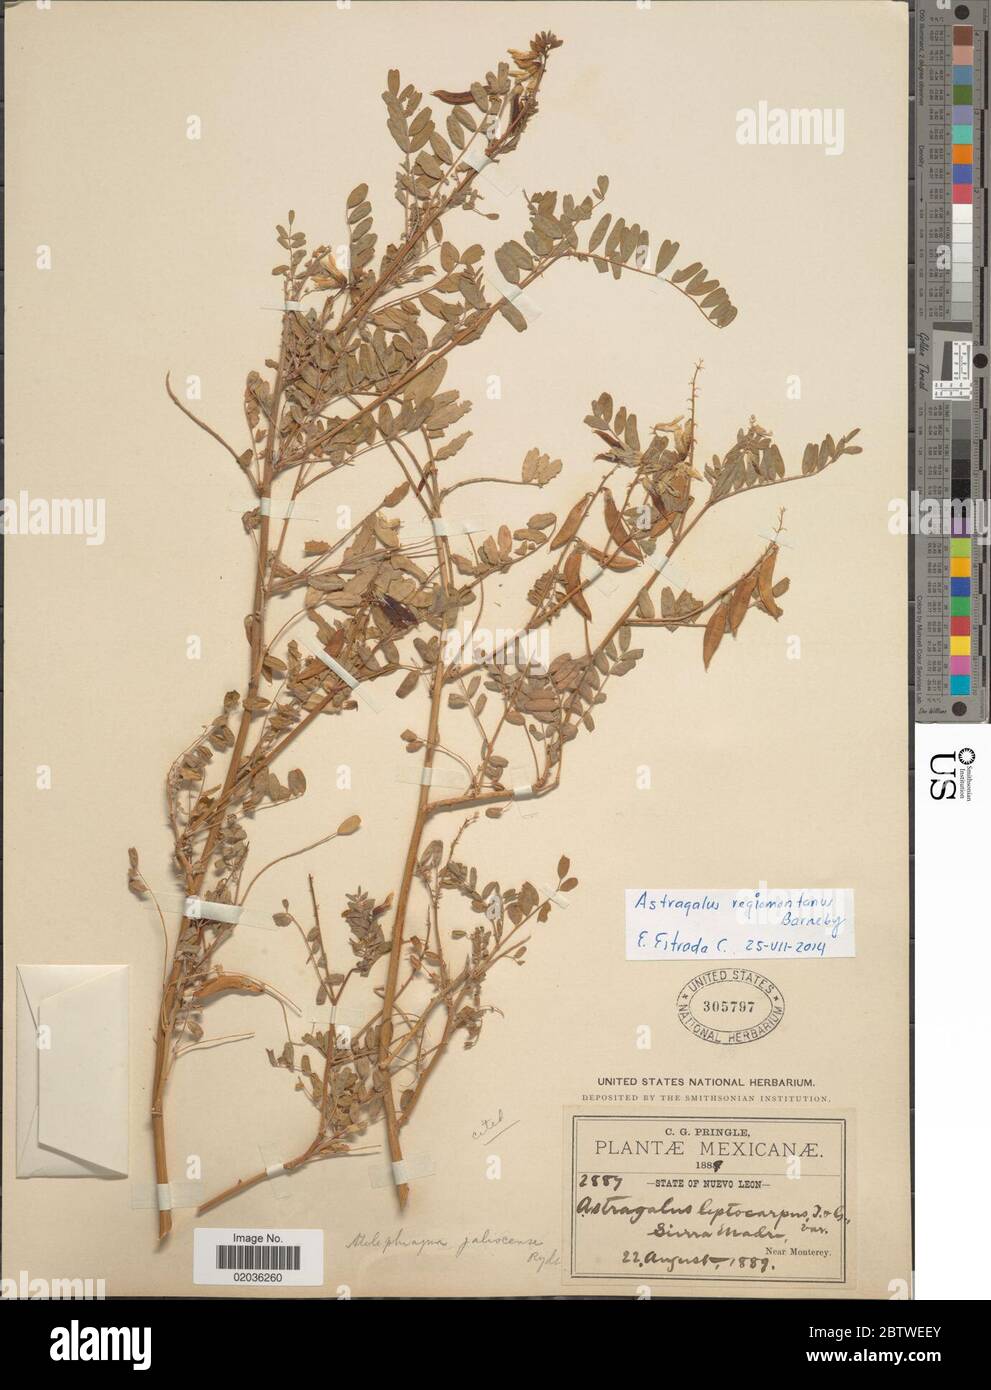 Astragalus regiomontanus Barneby. Stock Photo